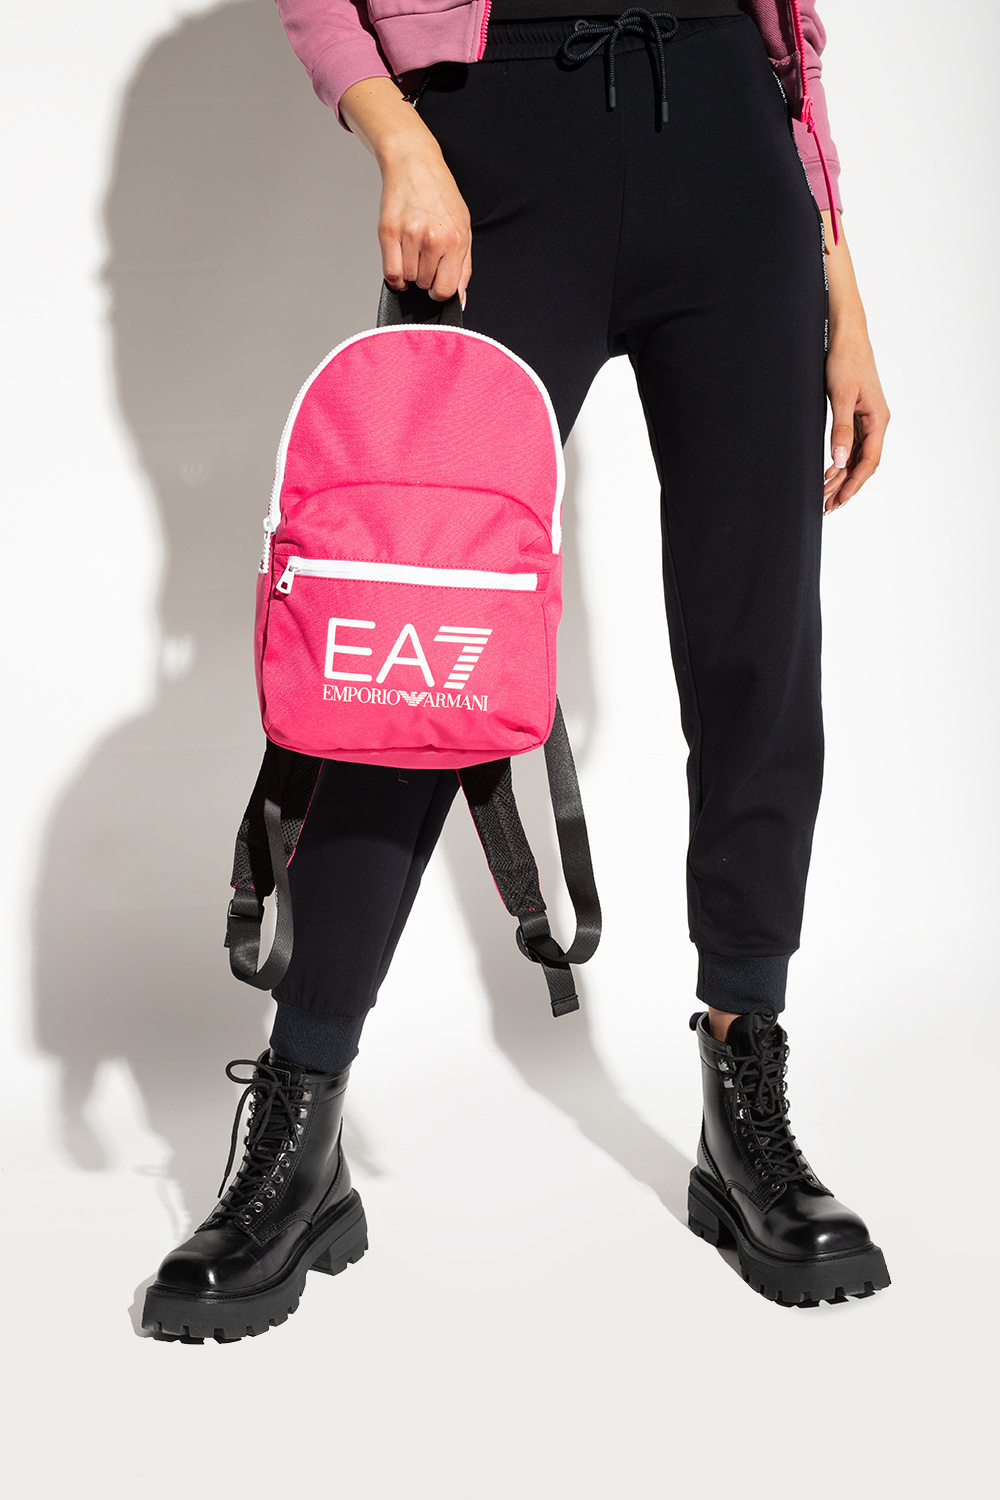 EA7 Emporio armani dress Backpack with logo